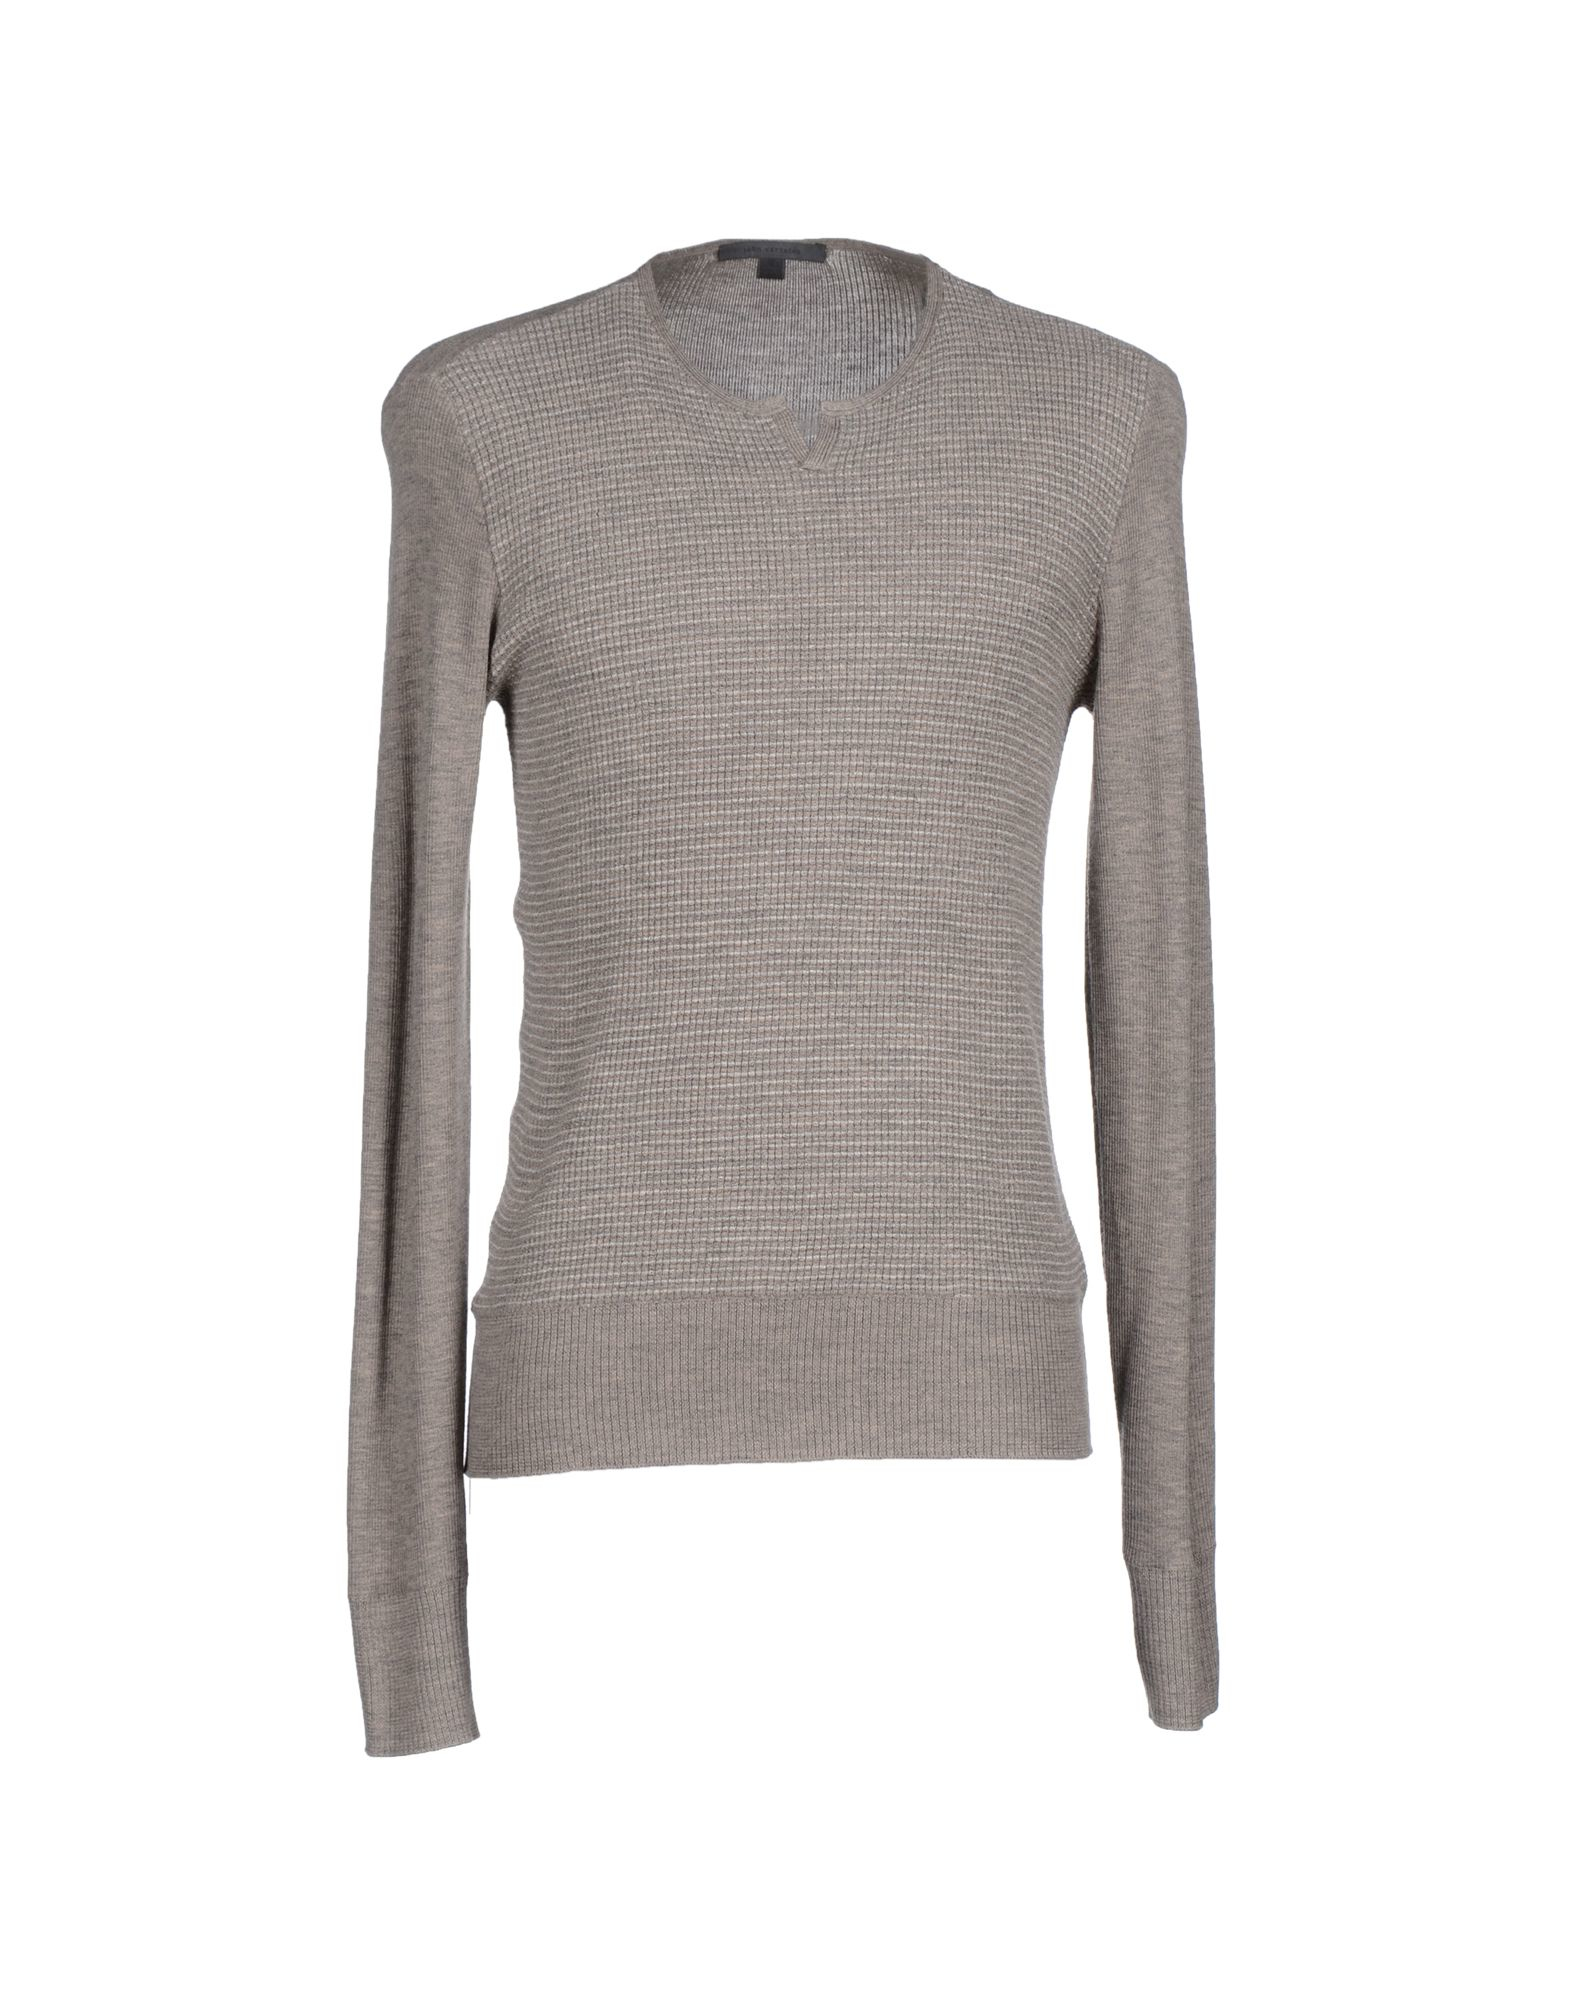 John varvatos Sweater in Gray for Men | Lyst